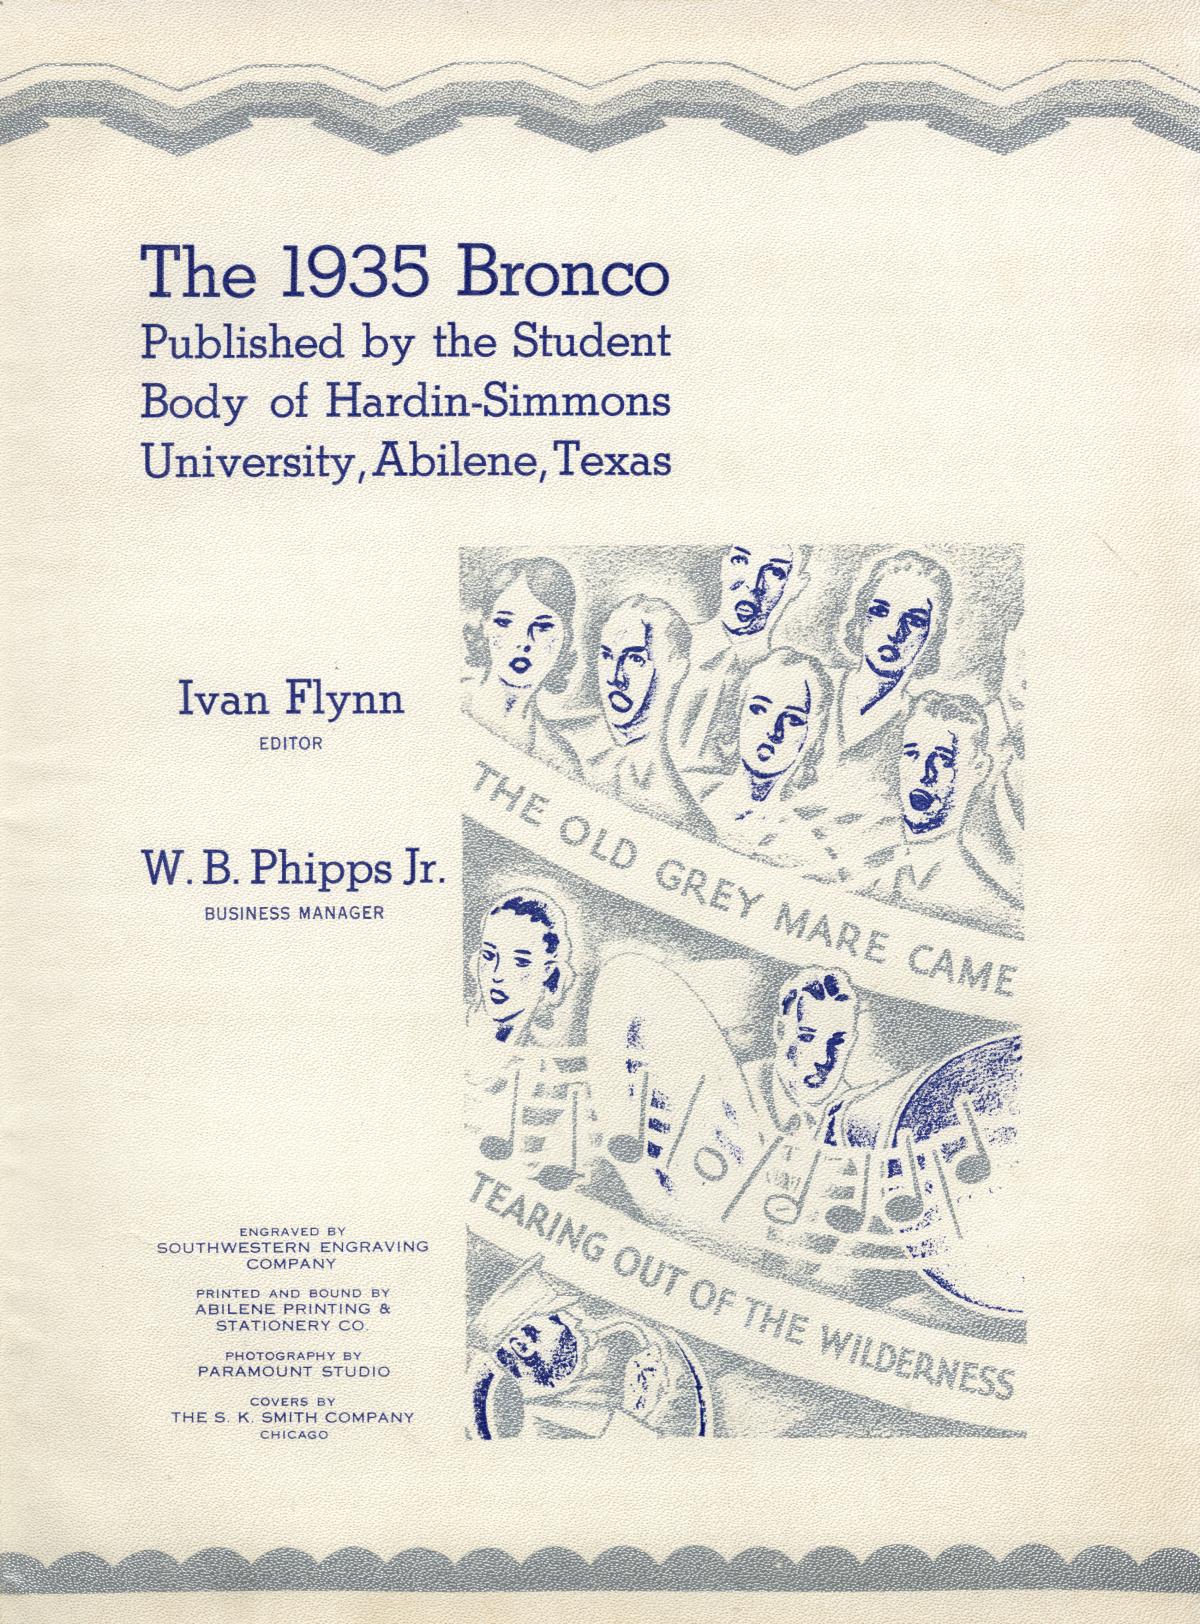 The Bronco, Yearbook of Hardin-Simmons University, 1935
                                                
                                                    3
                                                